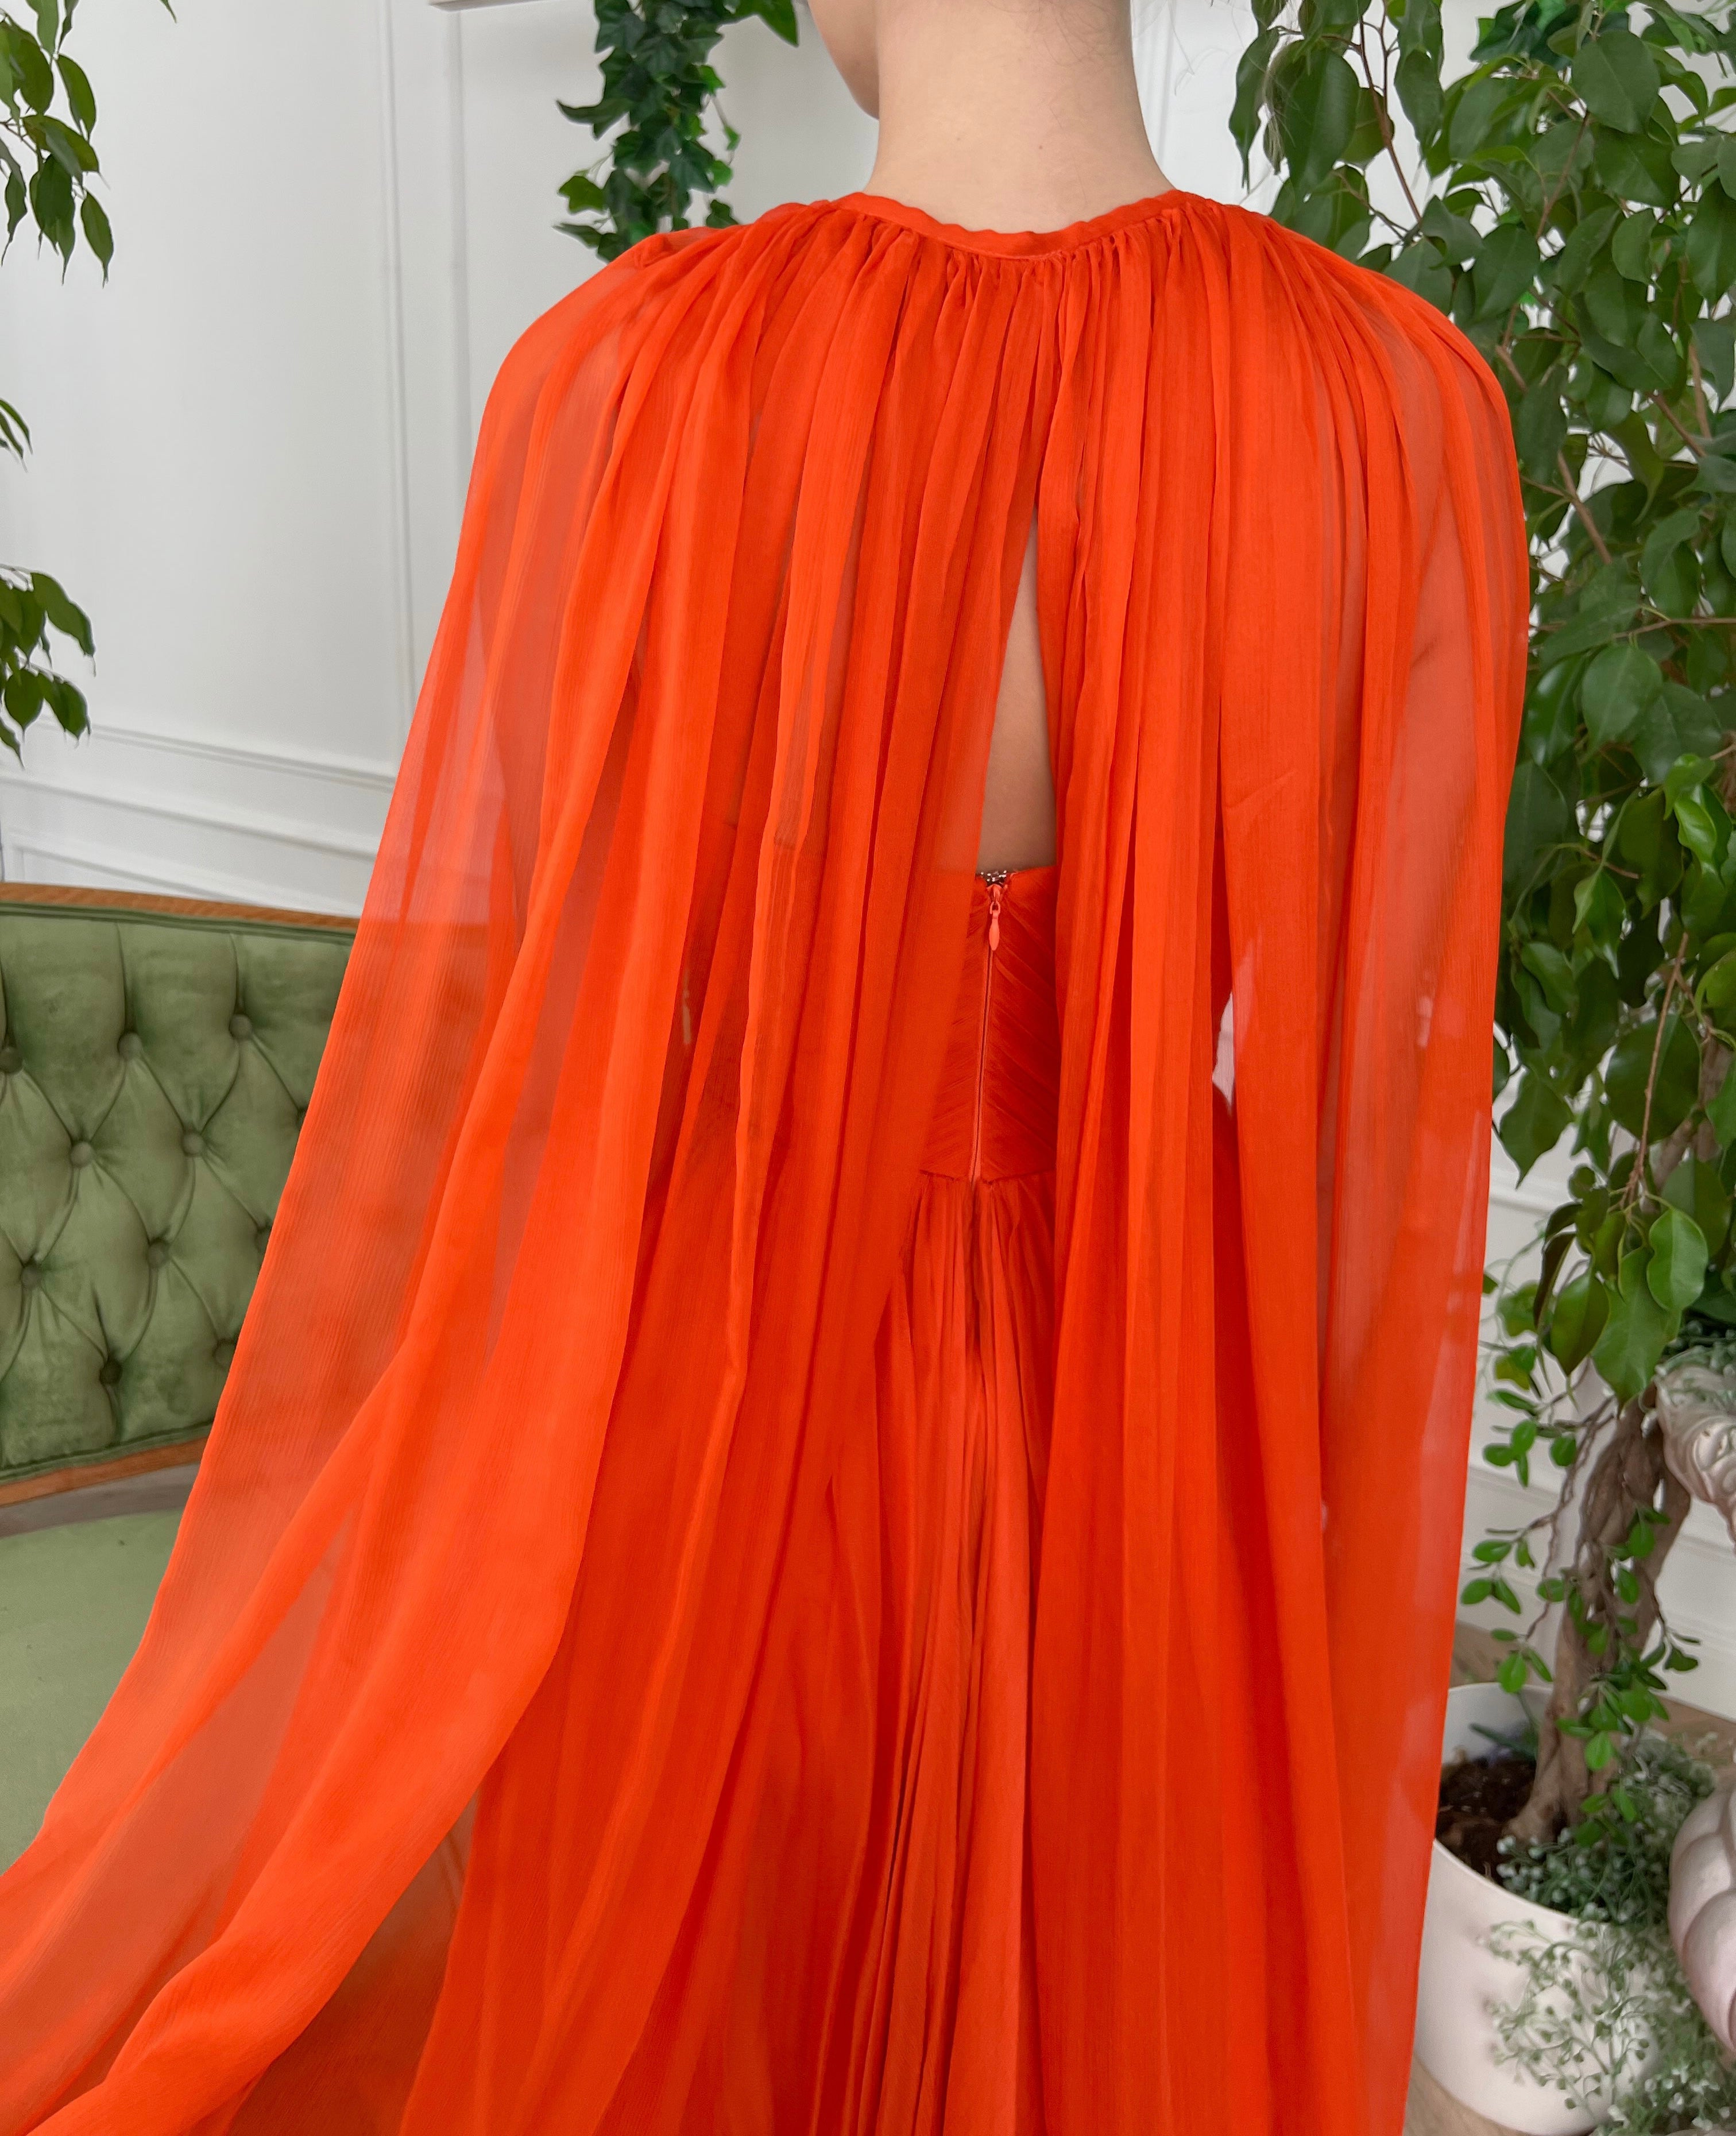 Orange A-Line dress with v-neck, no sleeves and cape